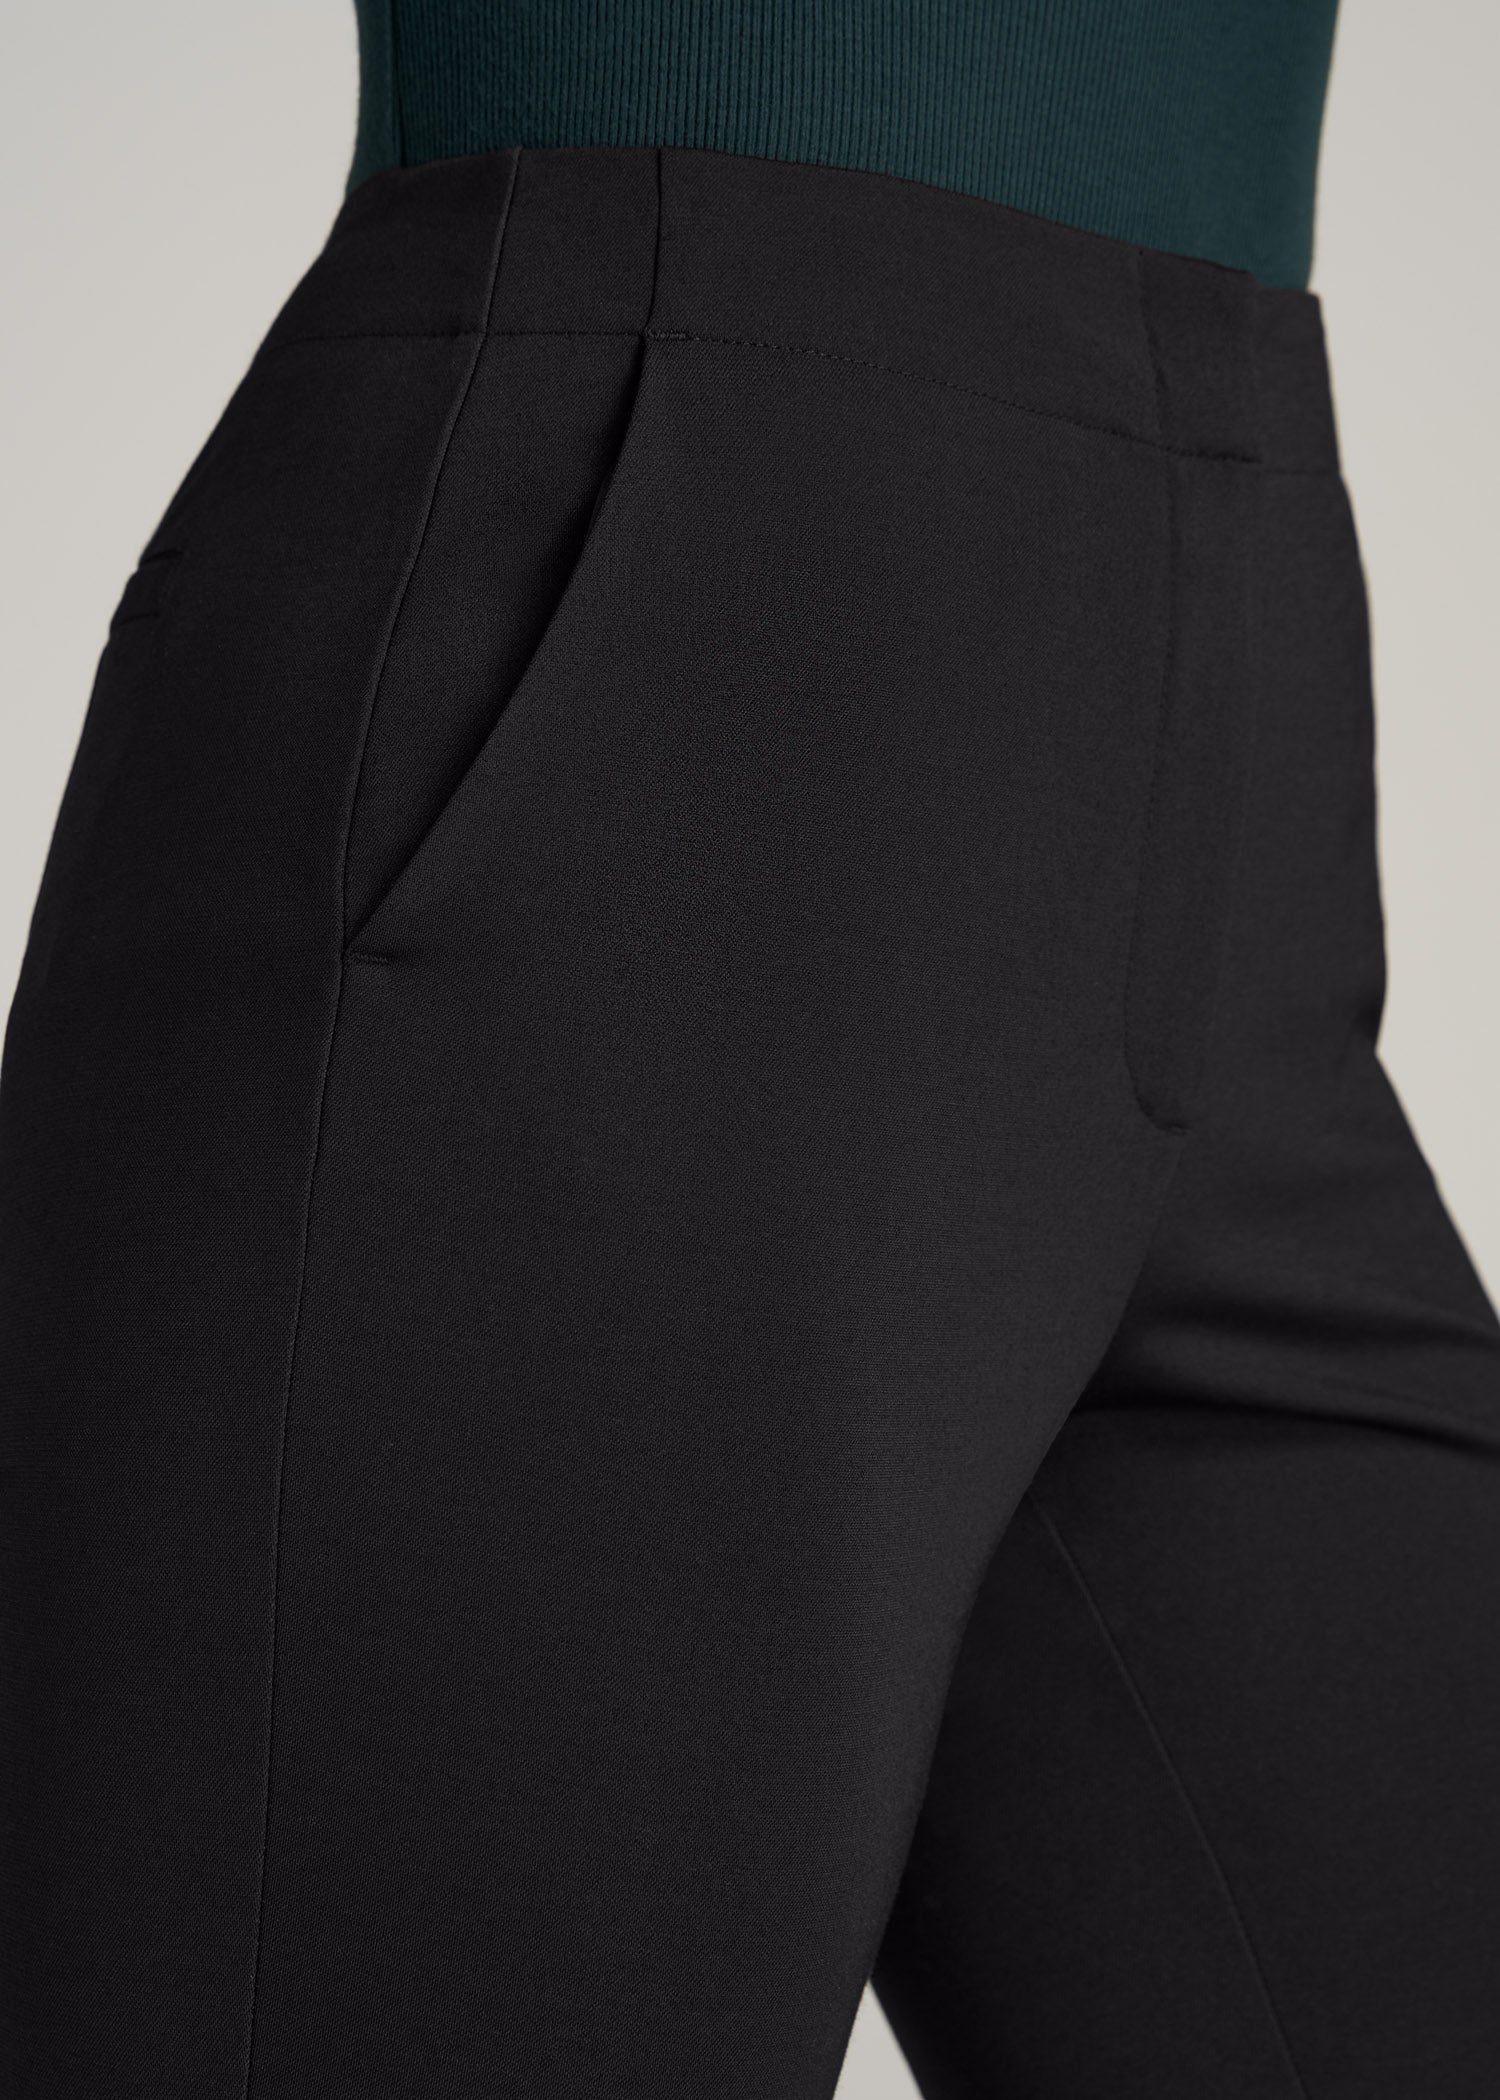 Lulus Women Black Dress Pants S Wide Leg With Slit | eBay